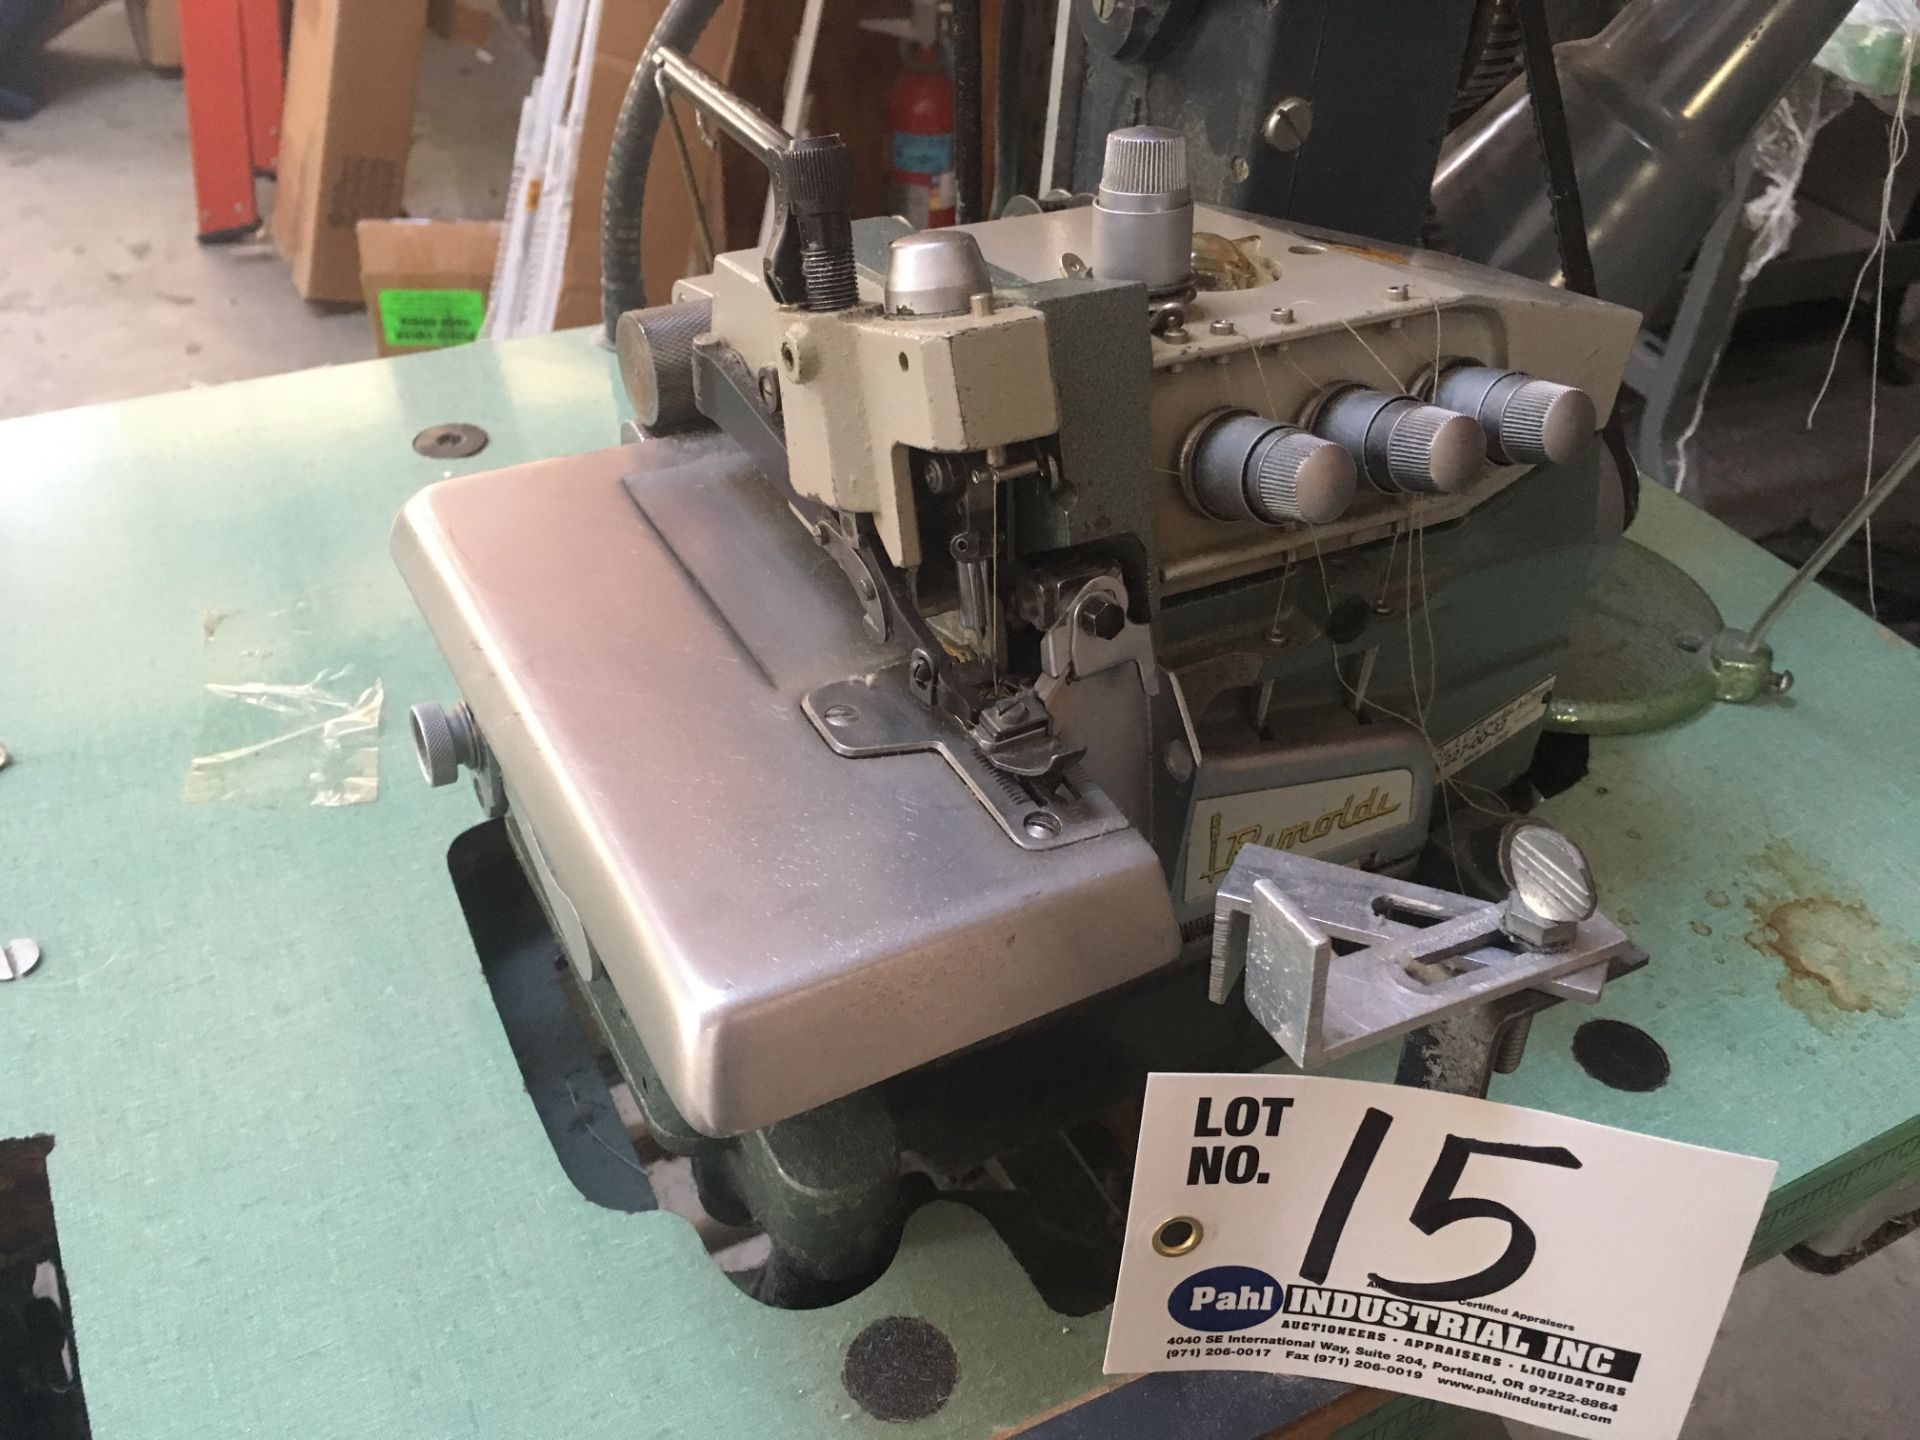 Rimoldi 227-00-32 Serger Sewing Machine - Image 2 of 3